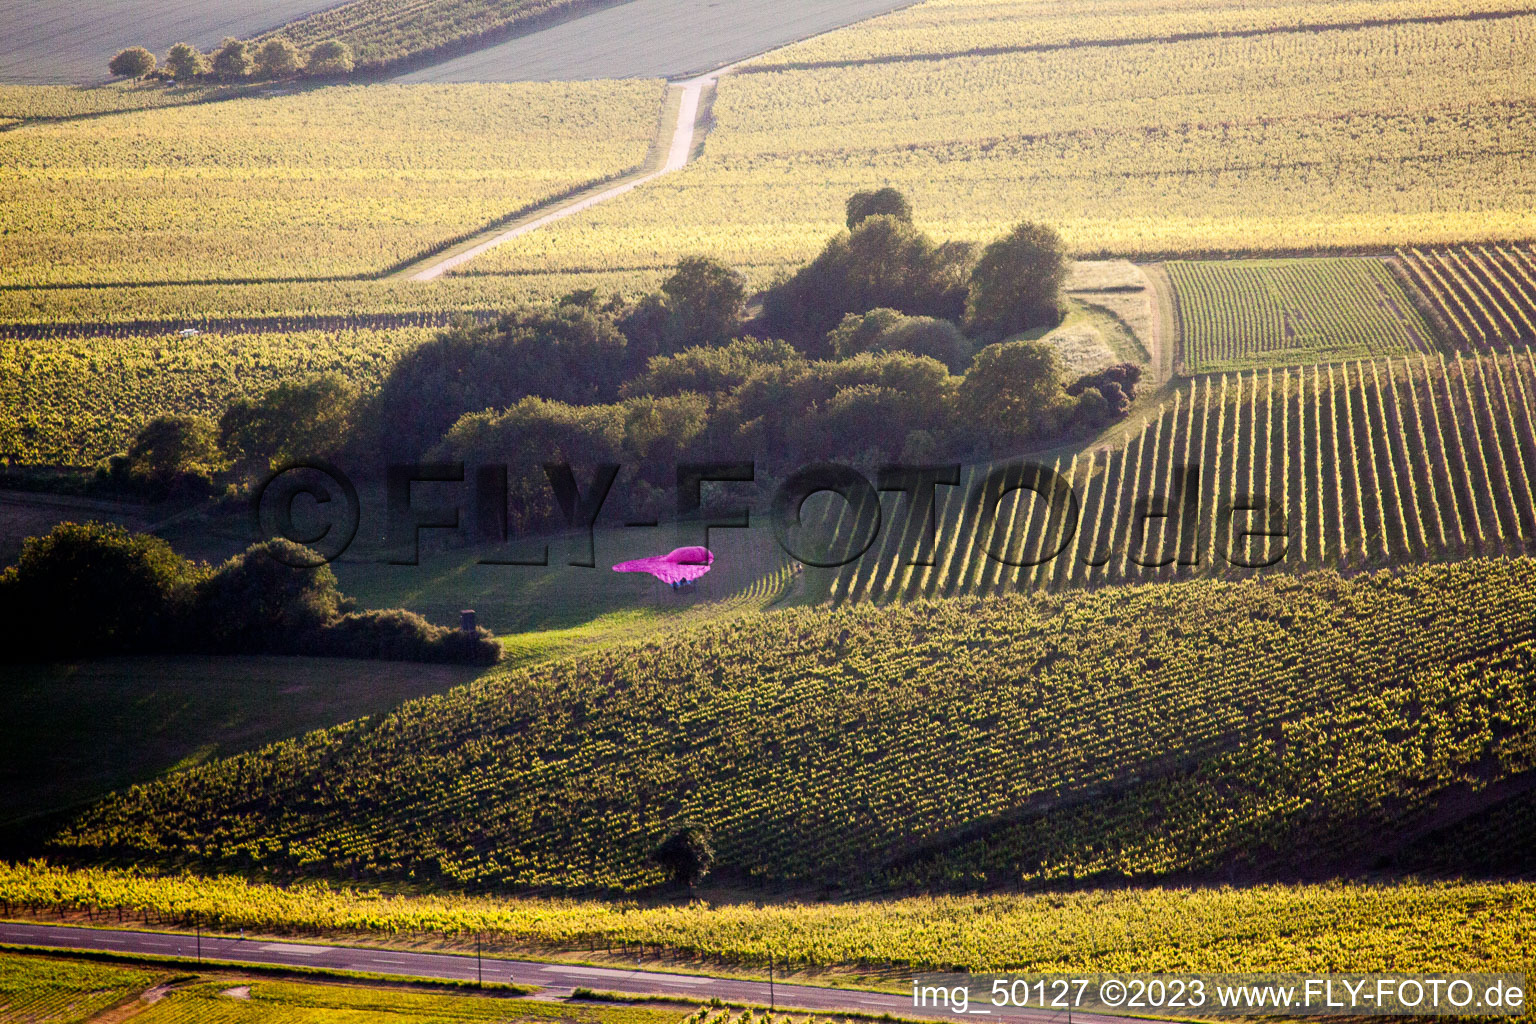 Balloon landing in Niederhorbach in the state Rhineland-Palatinate, Germany